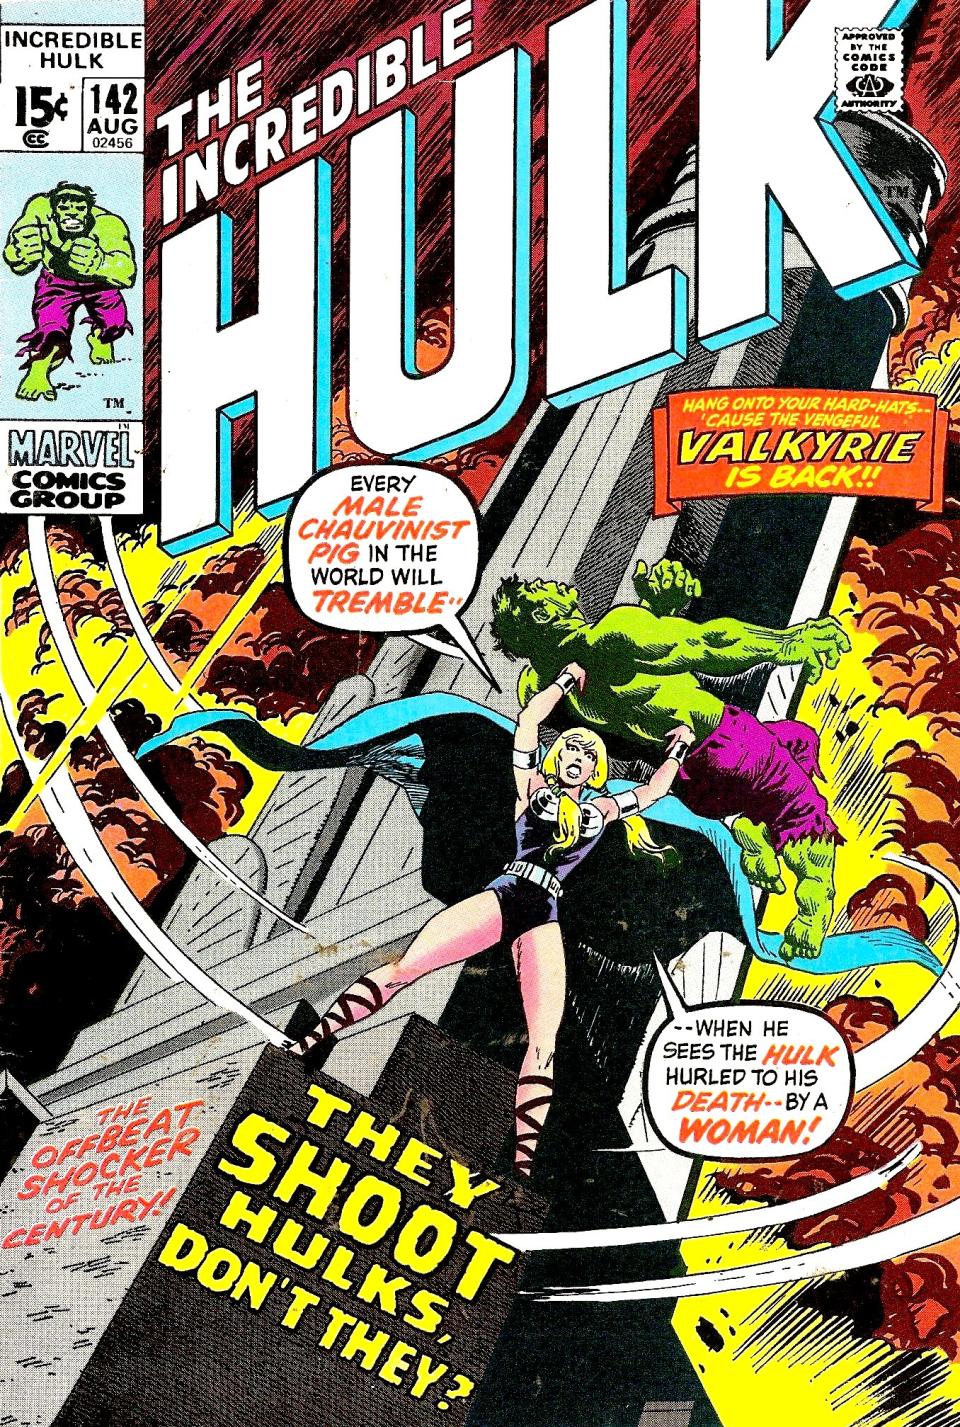 Valkyrie vs. Hulk on the cover of <i>The Incredible Hulk</i> 142. (Image: Marvel Comics)